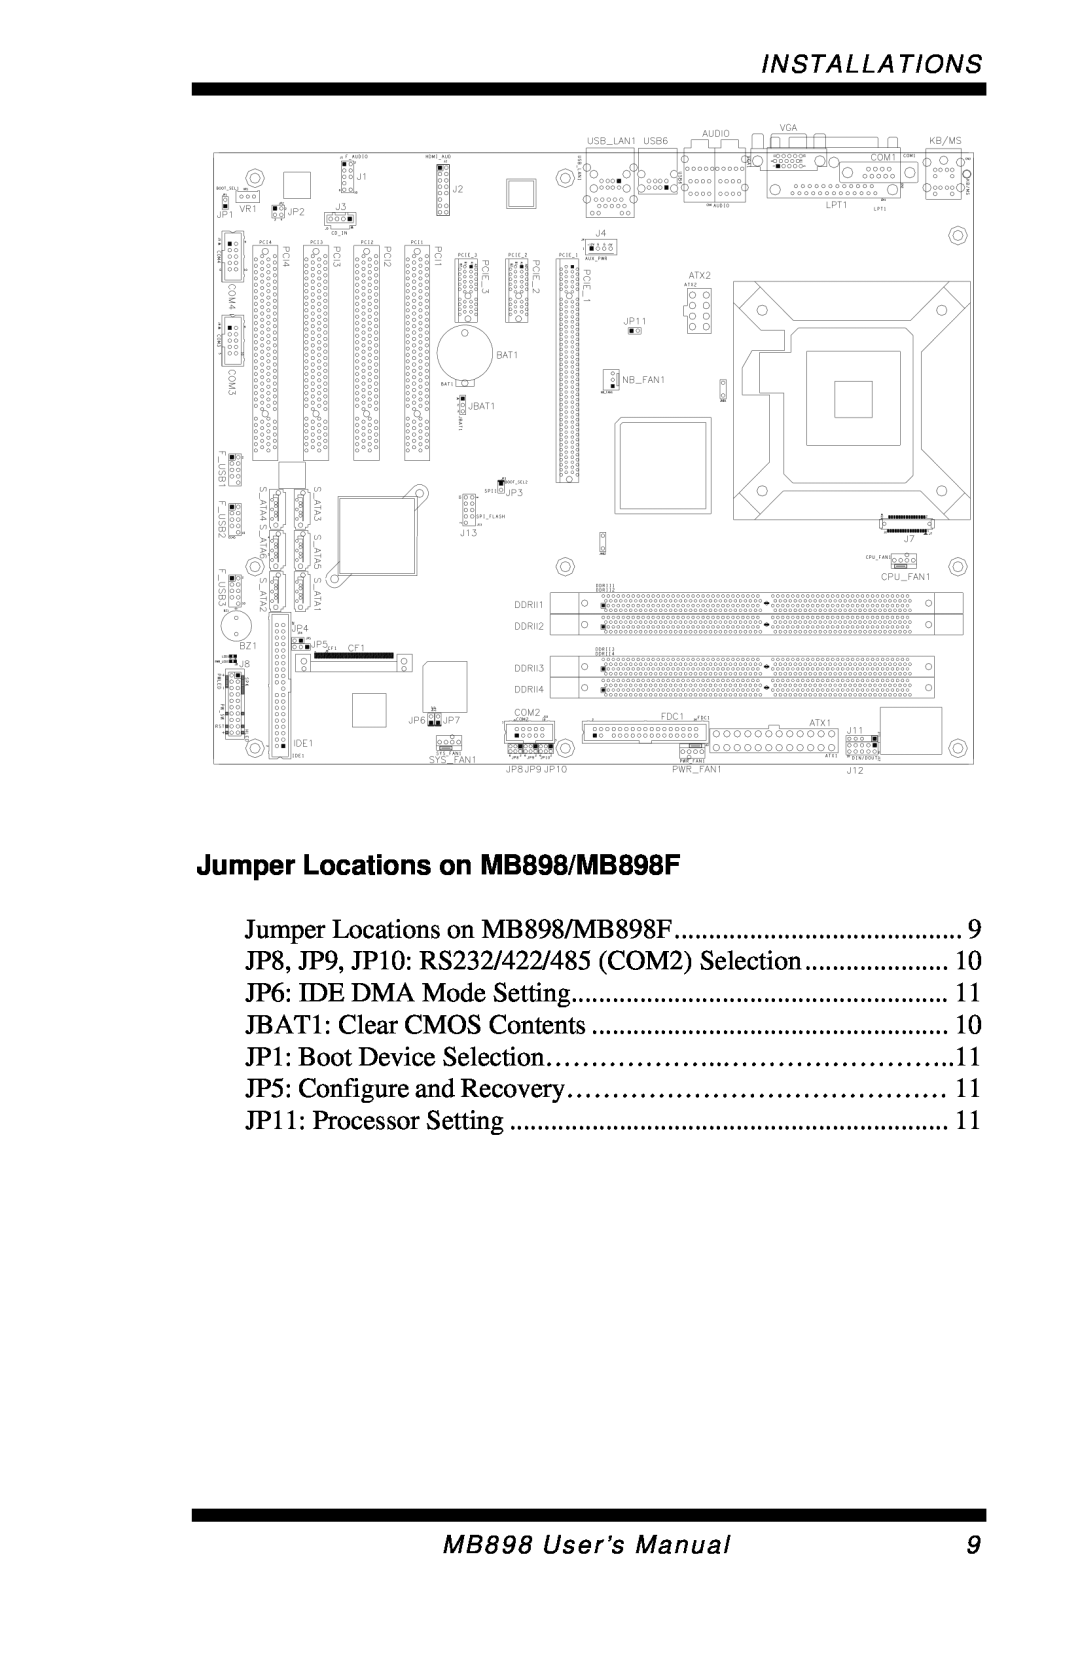 Intel MB898RF user manual Jumper Locations on MB898/MB898F, Installations, MB898 User’s Manual 